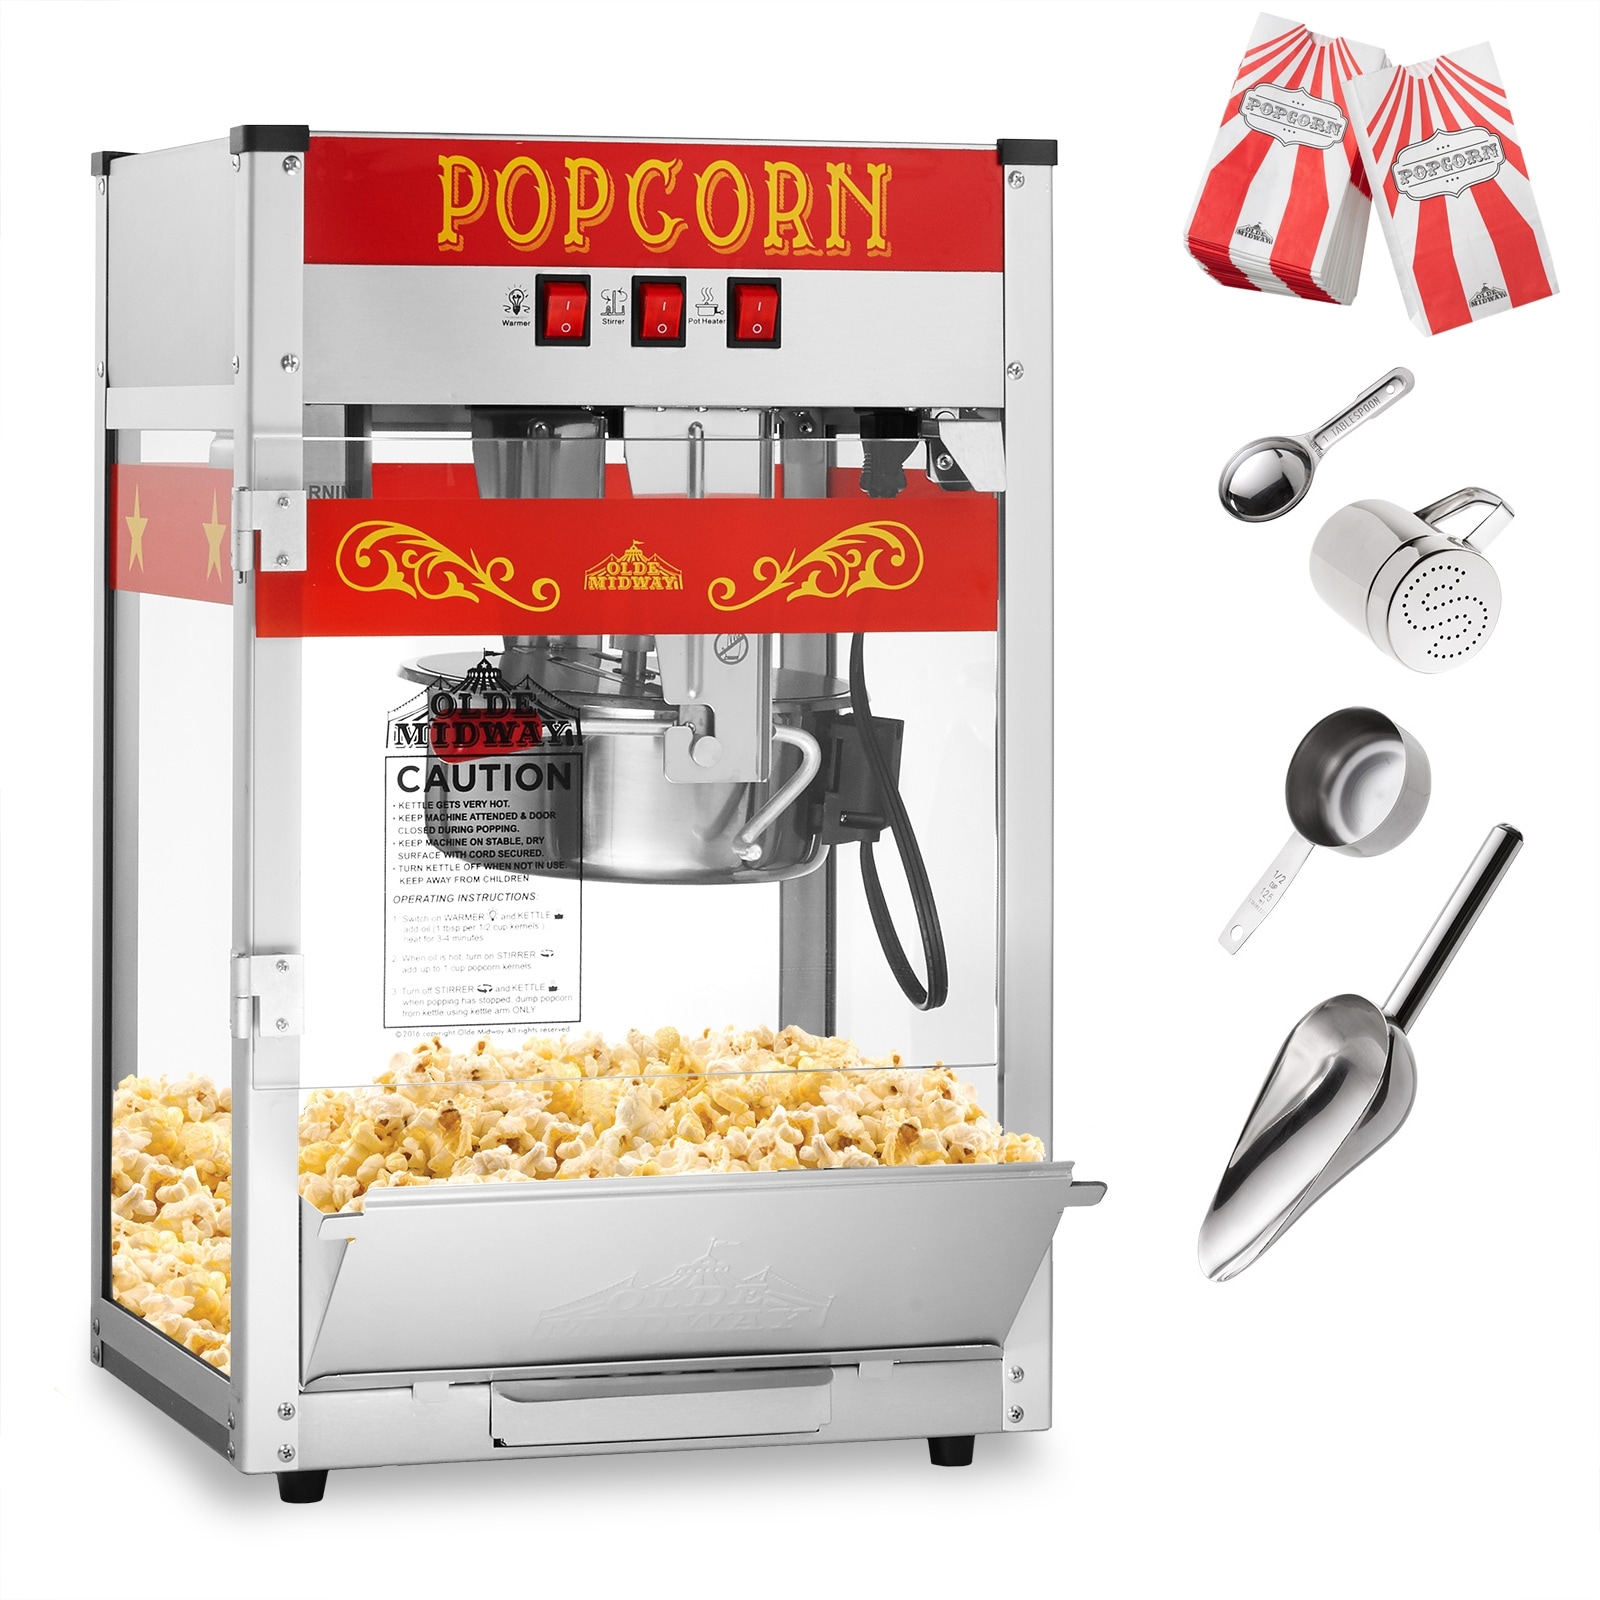 Plastic Popcorn Machine, For home, 200.0 grams per batch